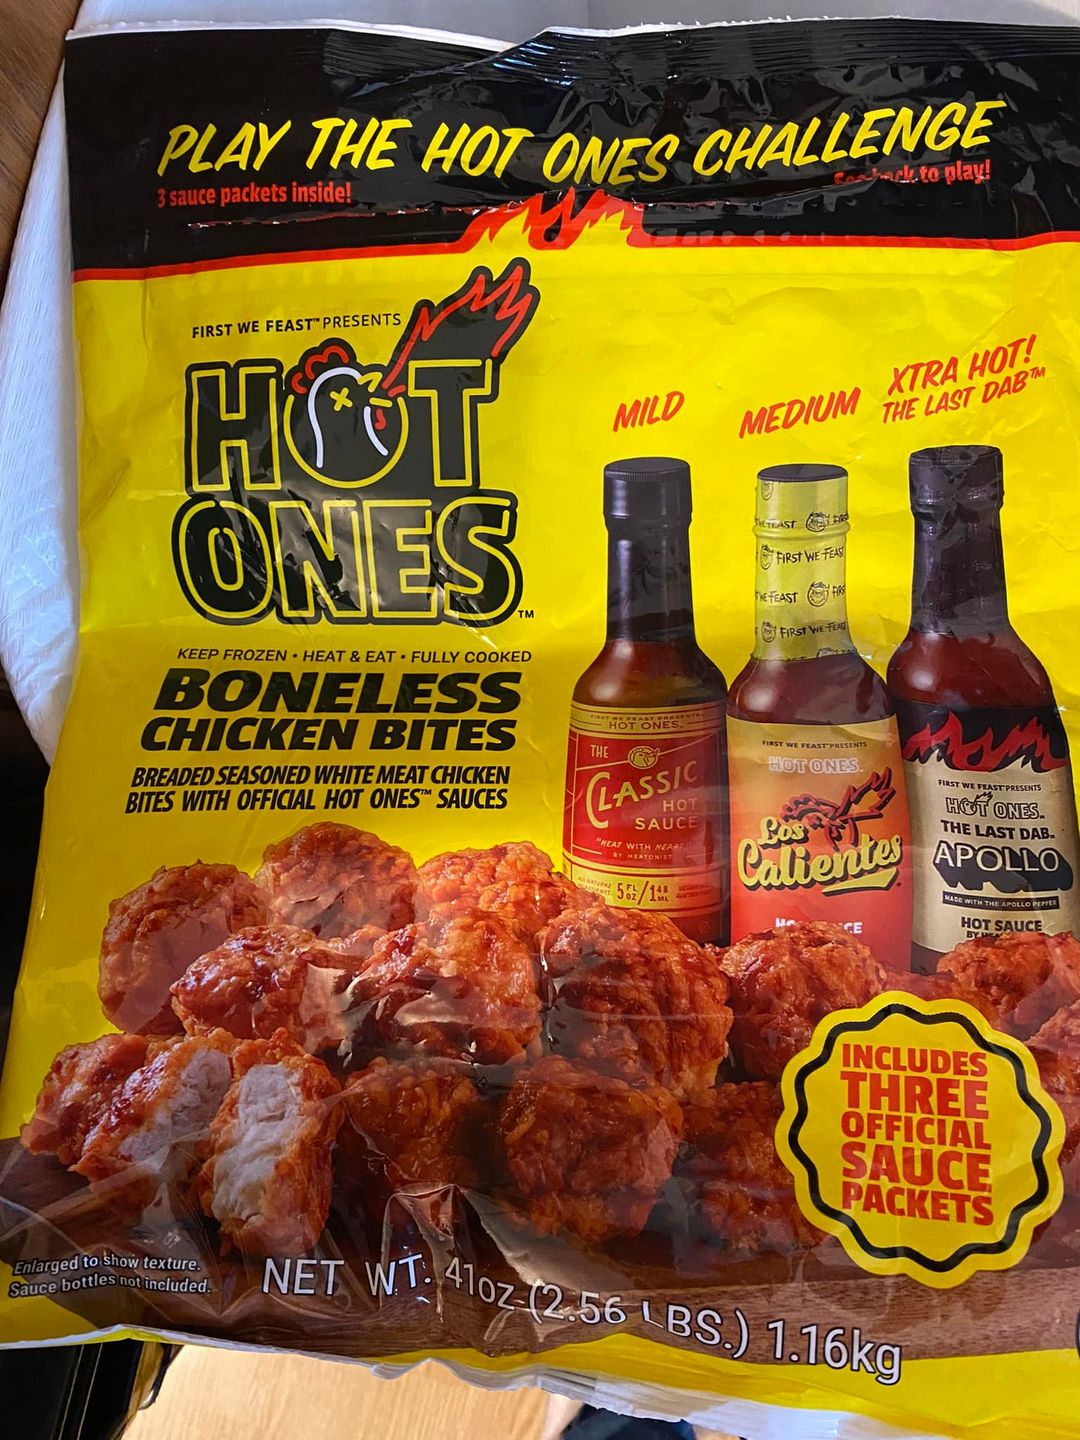 em> Hot Ones </em> Boneless Chicken Bites line launches at Walmart